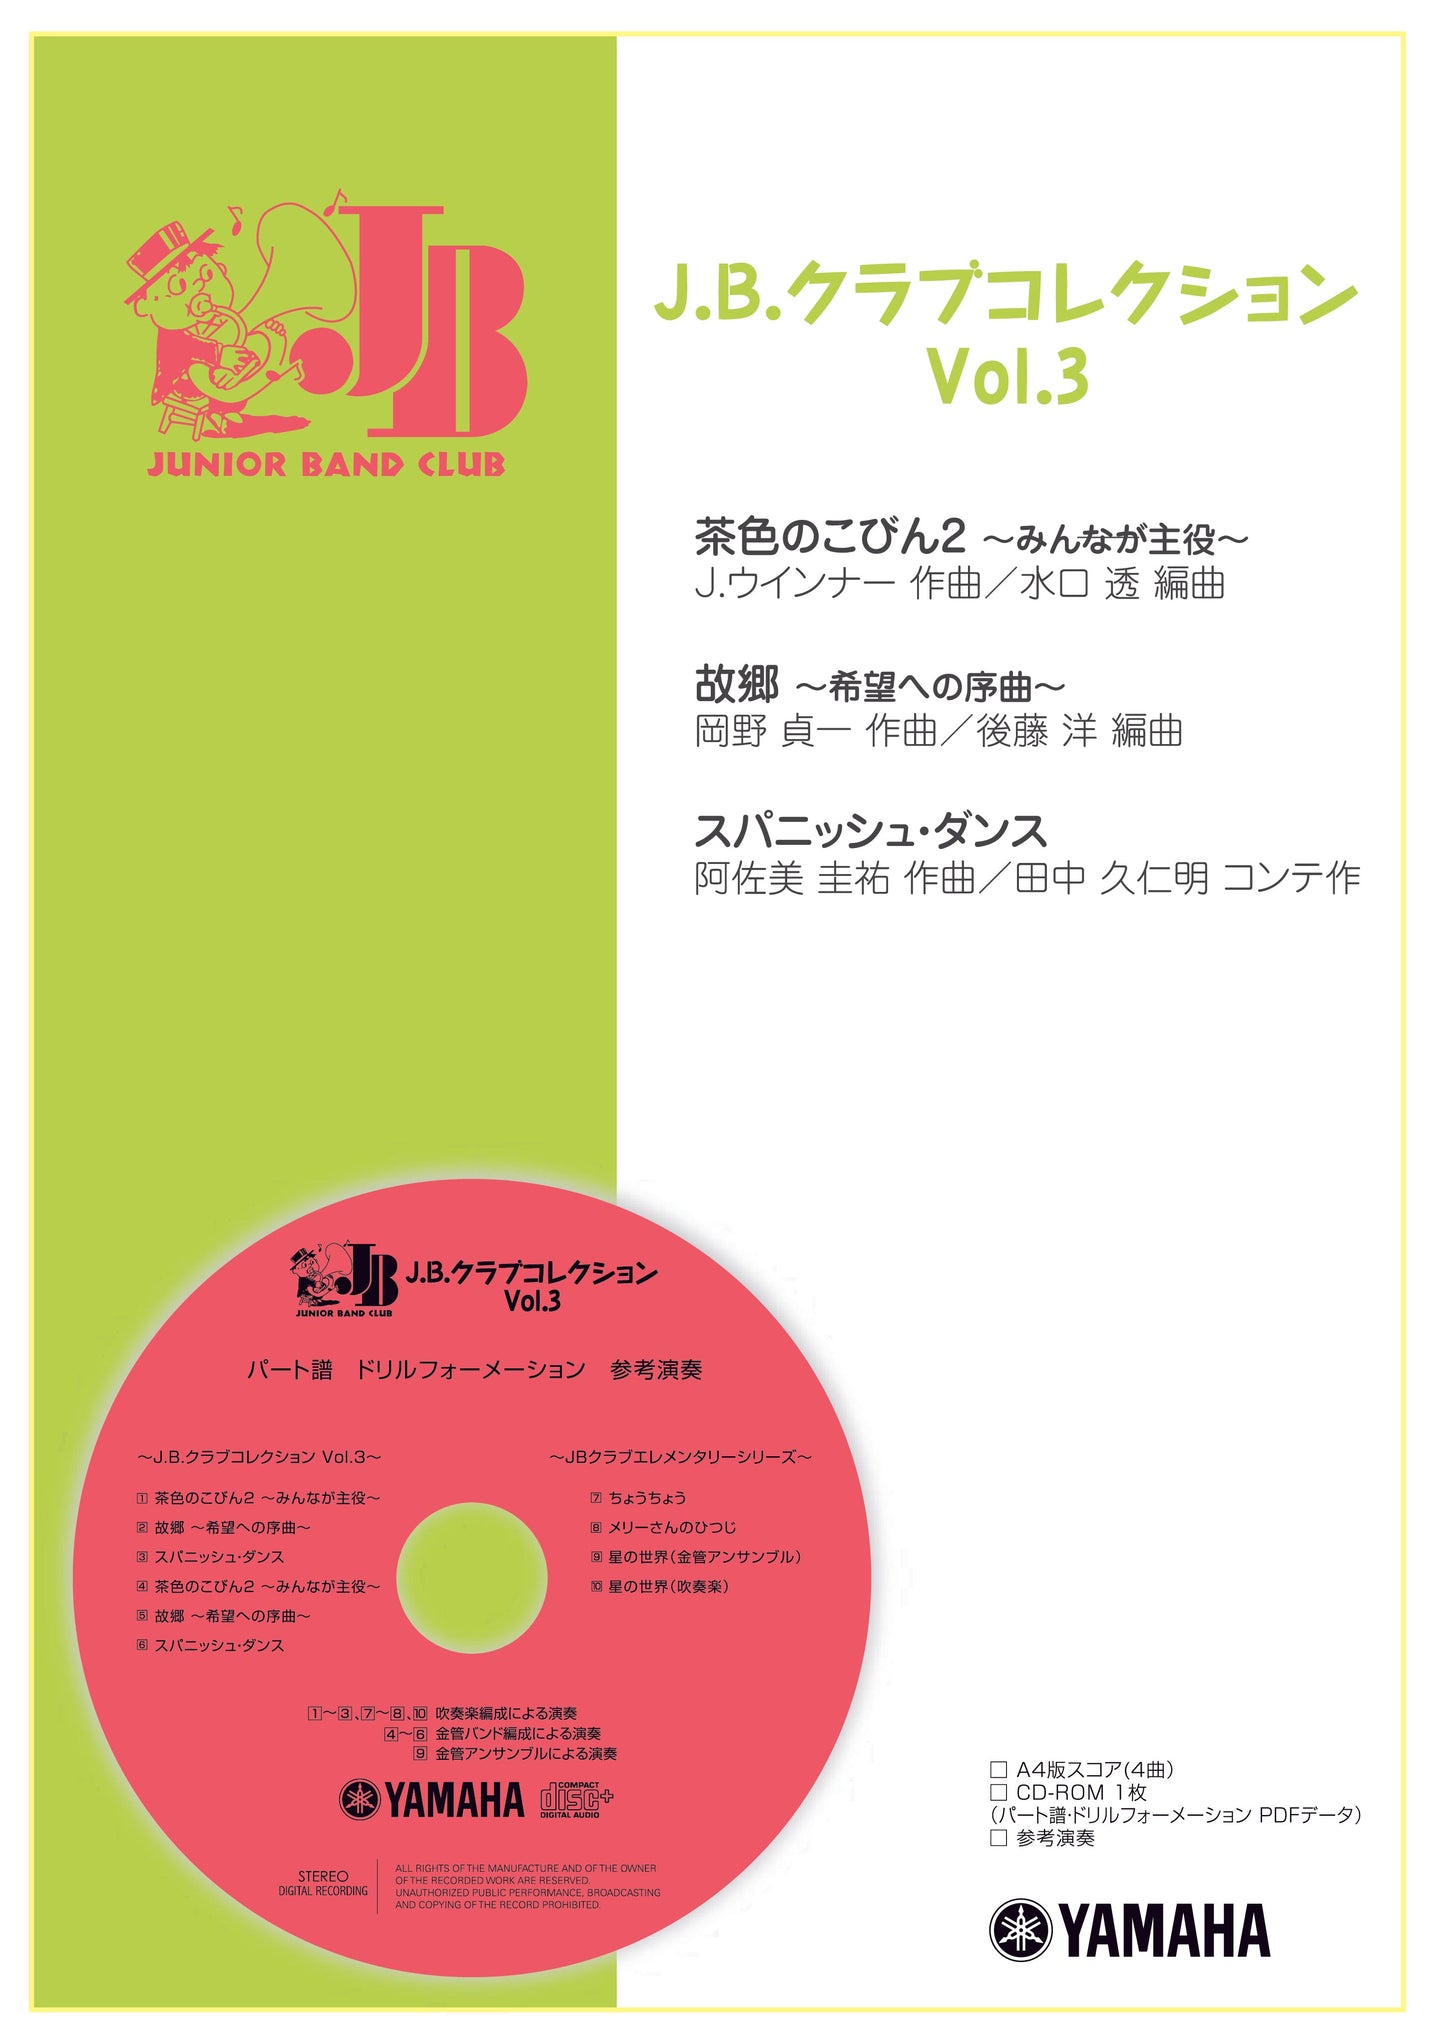 J.B.クラブ J.B.クラブ コレクション Vol.3 (2013年度発刊)